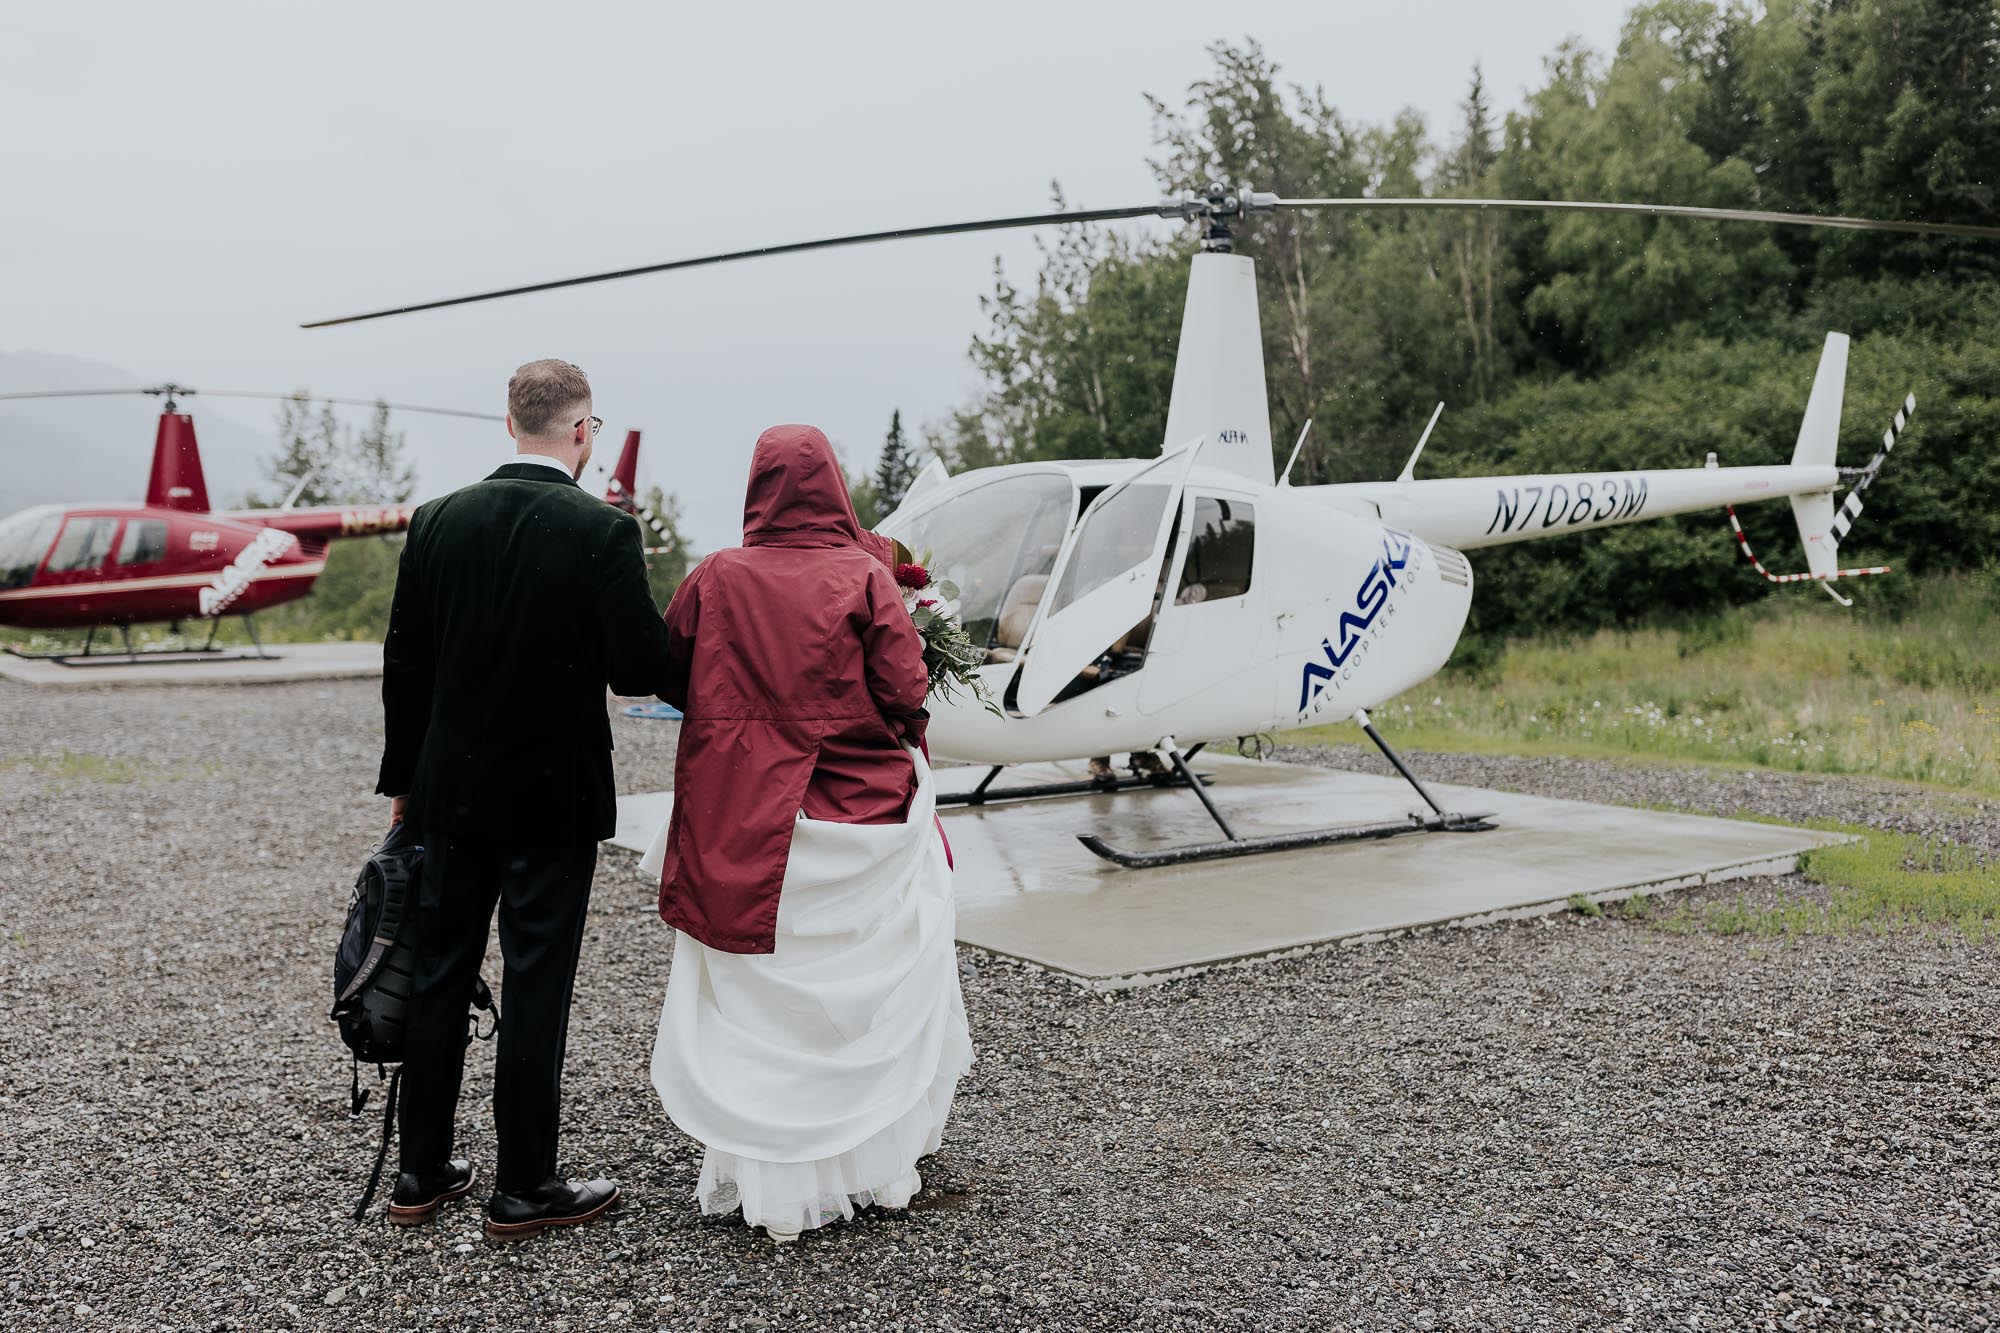 glacier helicopter elopement alaska wedding photographer